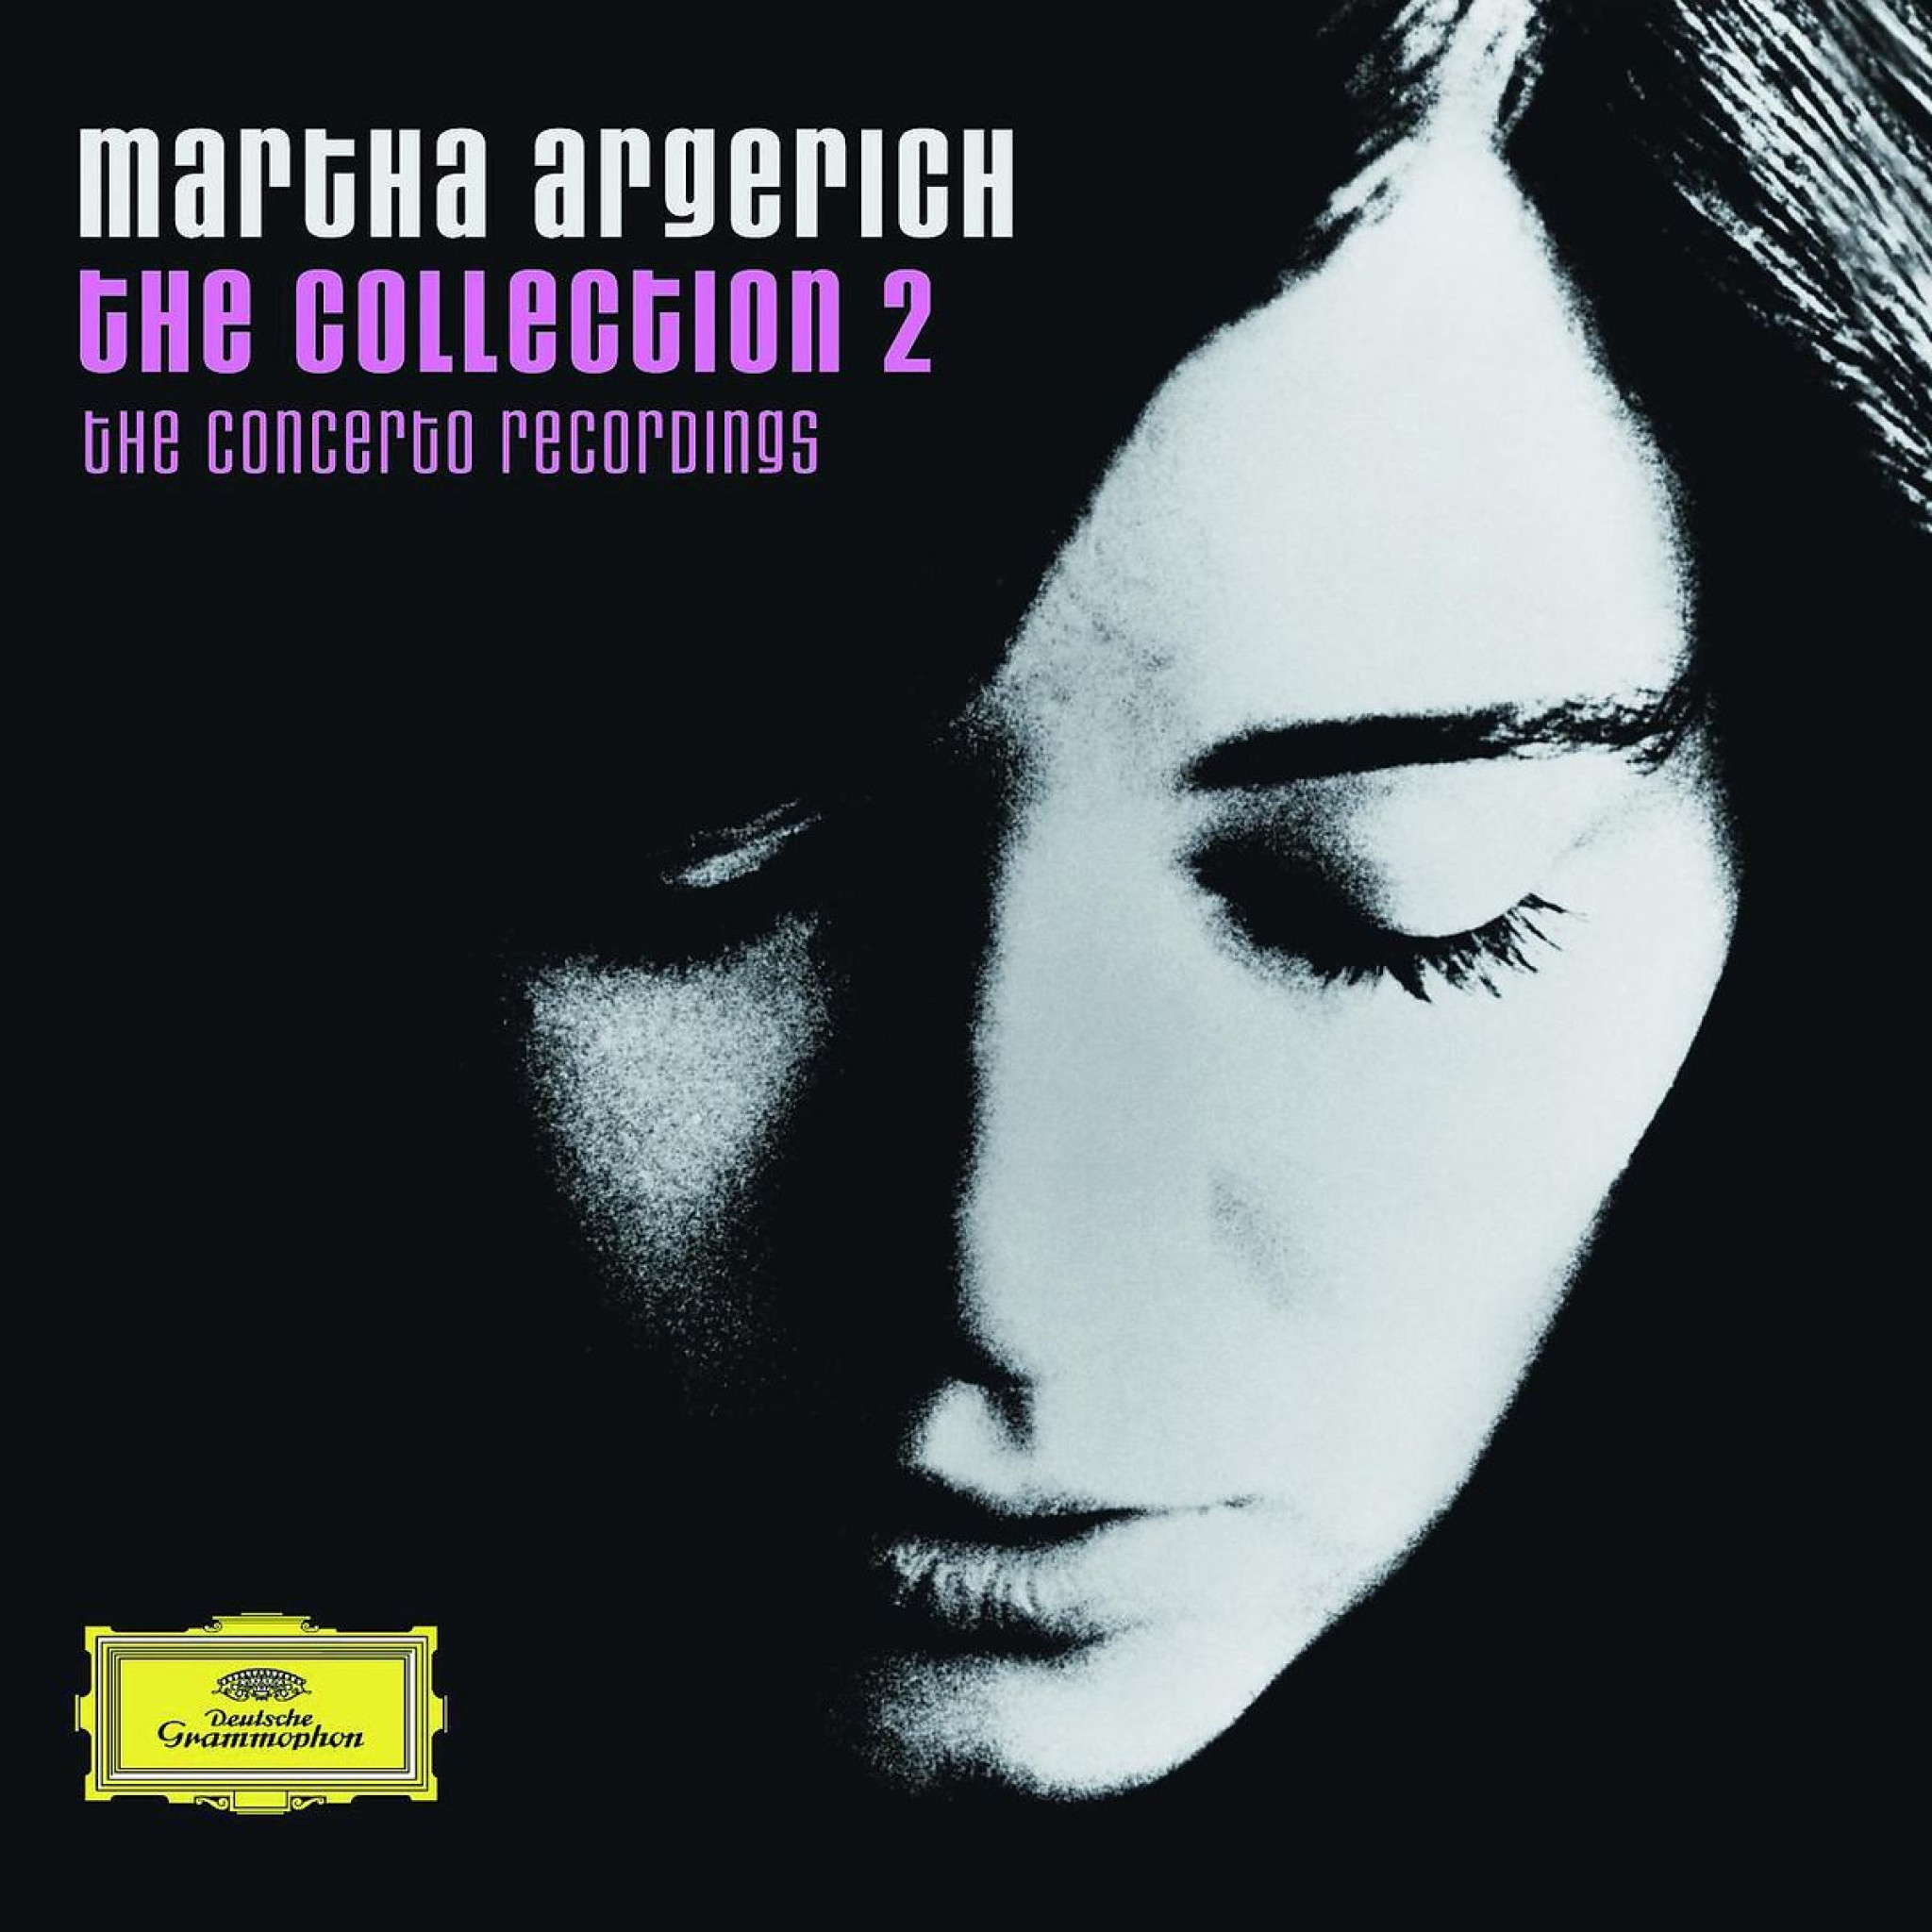 Argerich Collection 2 - The Concerto Recordings